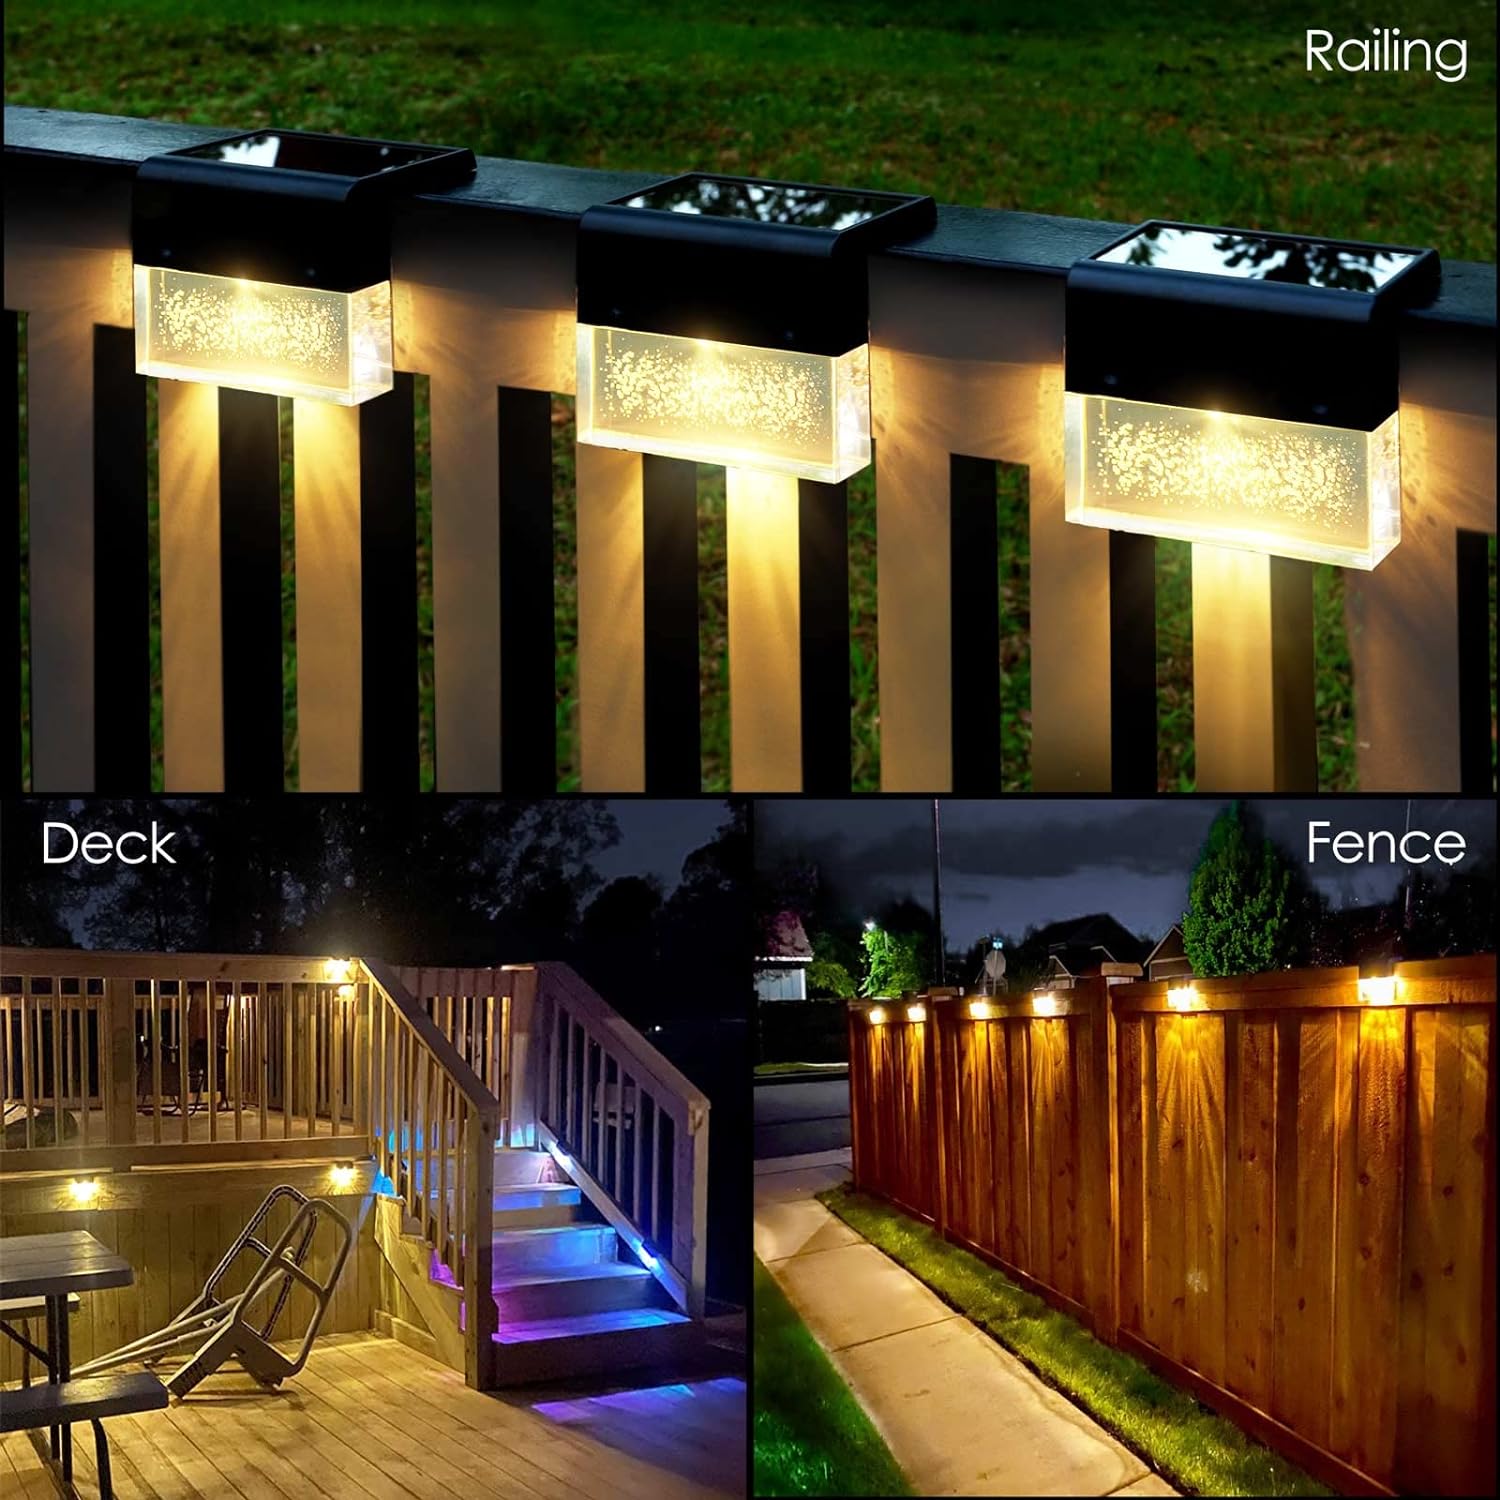 denicmic Solar Deck Lights Outdoor Fence Solar Lights for Step, Railing, Wall, LED Waterproof Landscape Lighting Garden Patio Decor 6 Pa